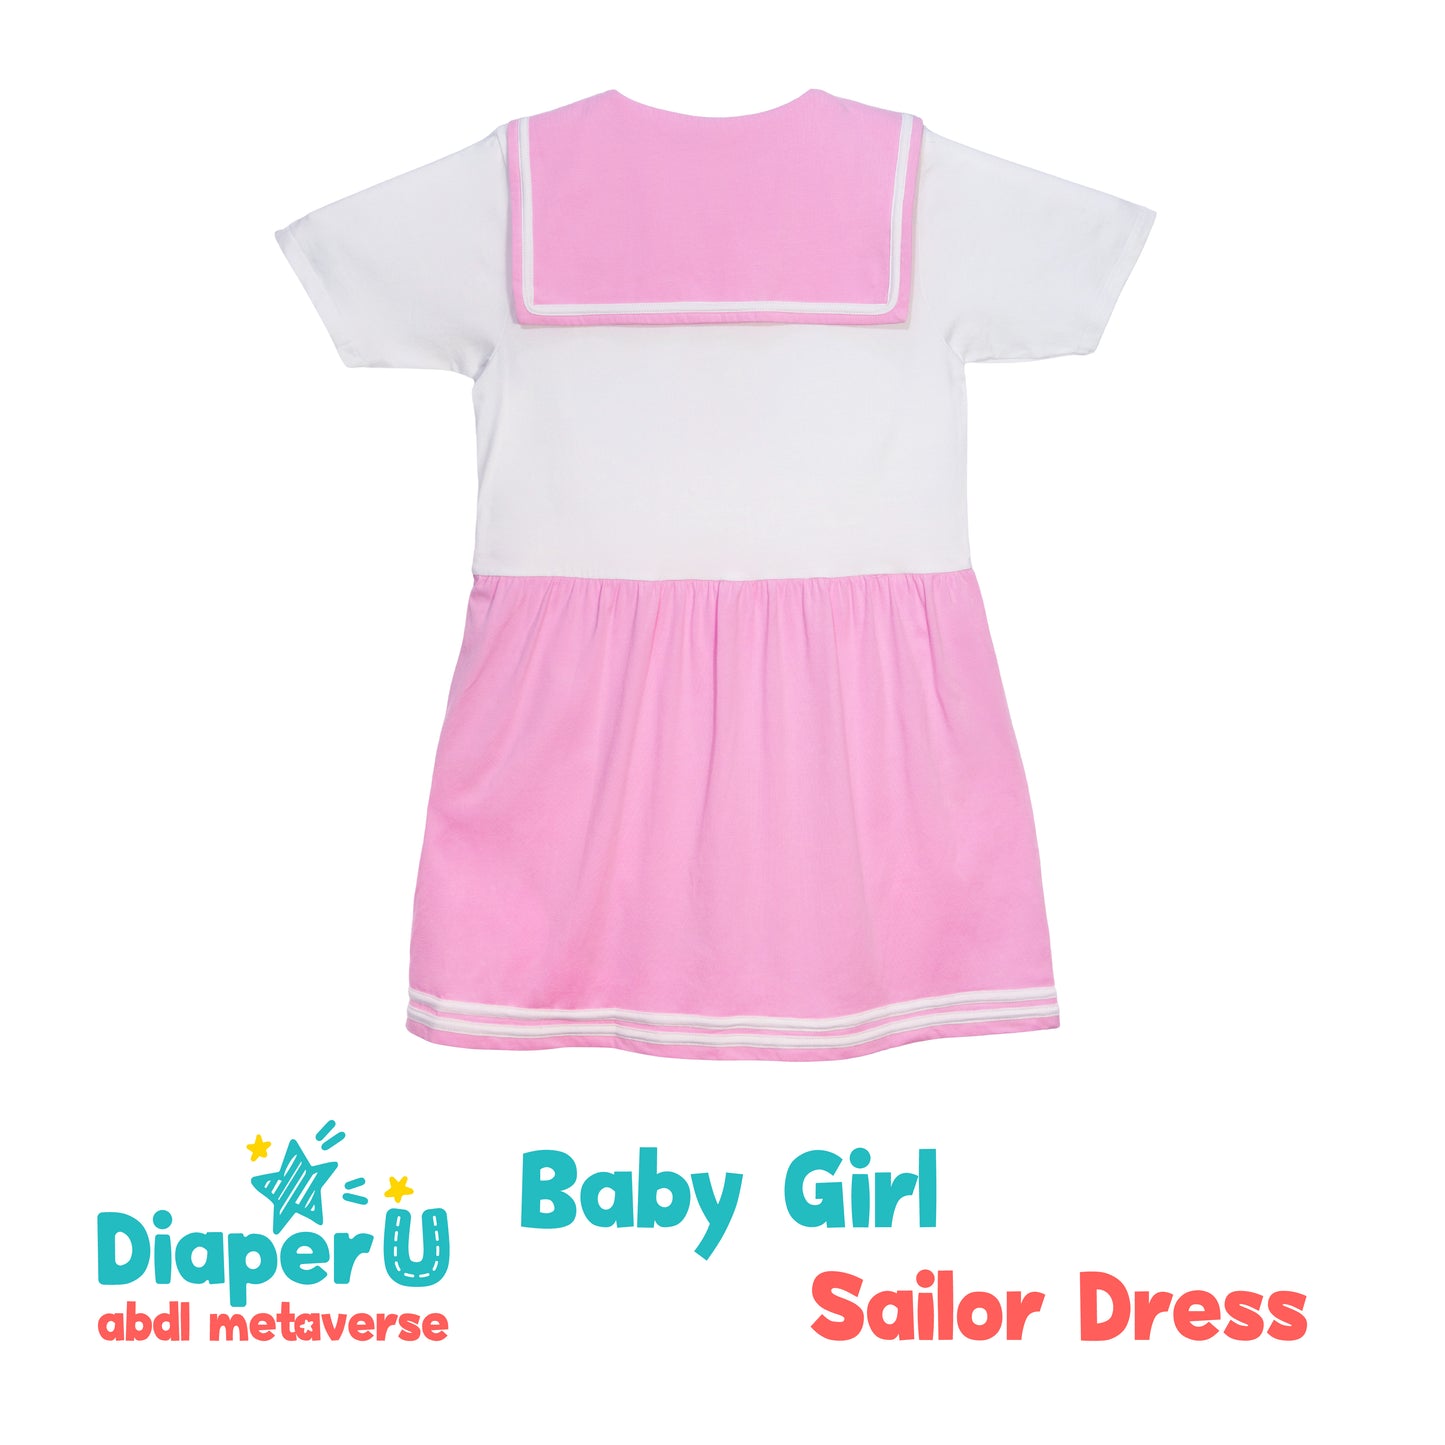 Baby Girl Sailor Dress